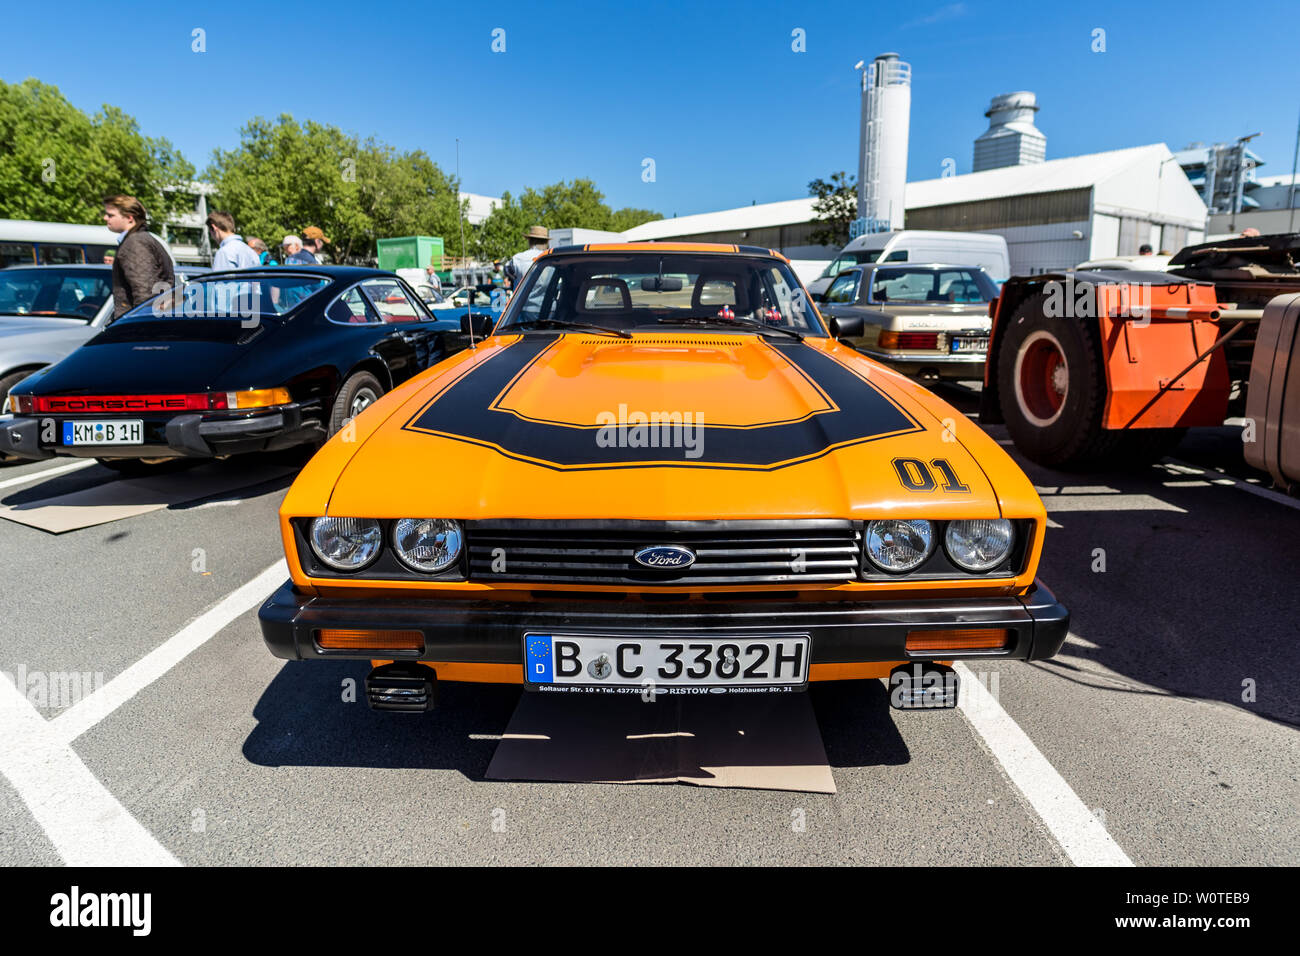 Orange capri car hi-res stock photography and images - Alamy